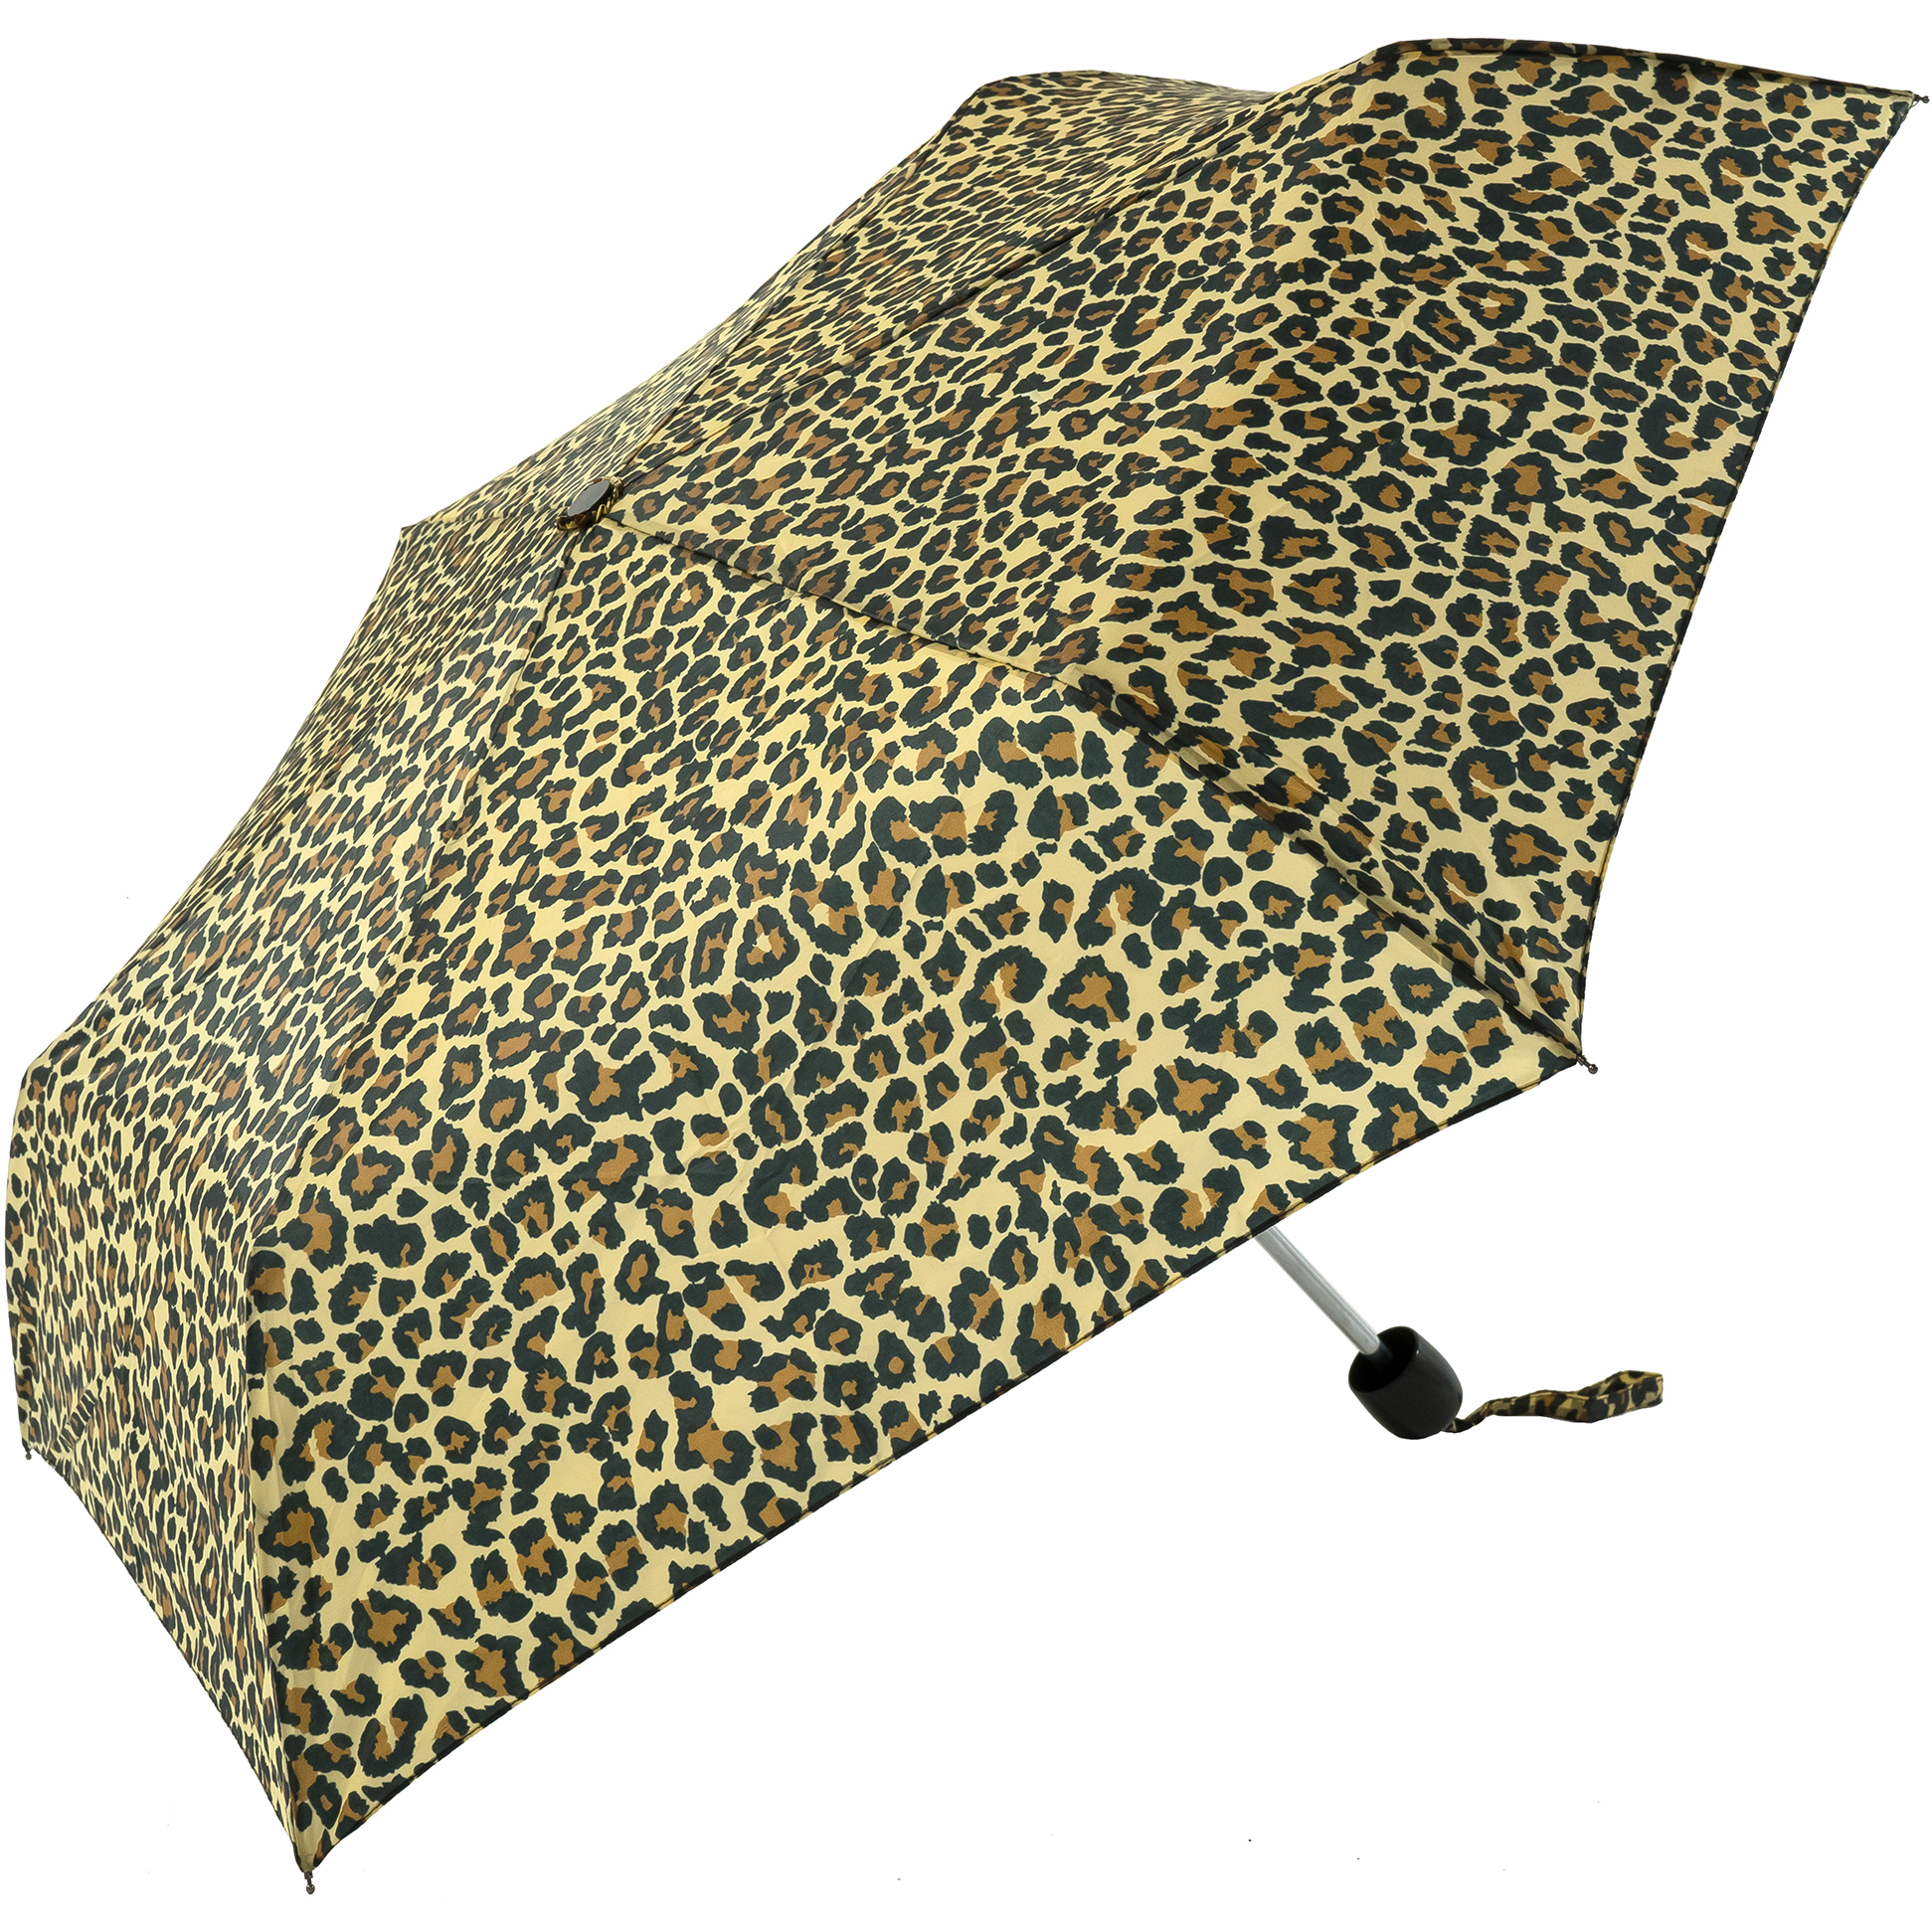 Trio of Animal Print Compact Umbrellas and matching Reusable Bags (31099-b)